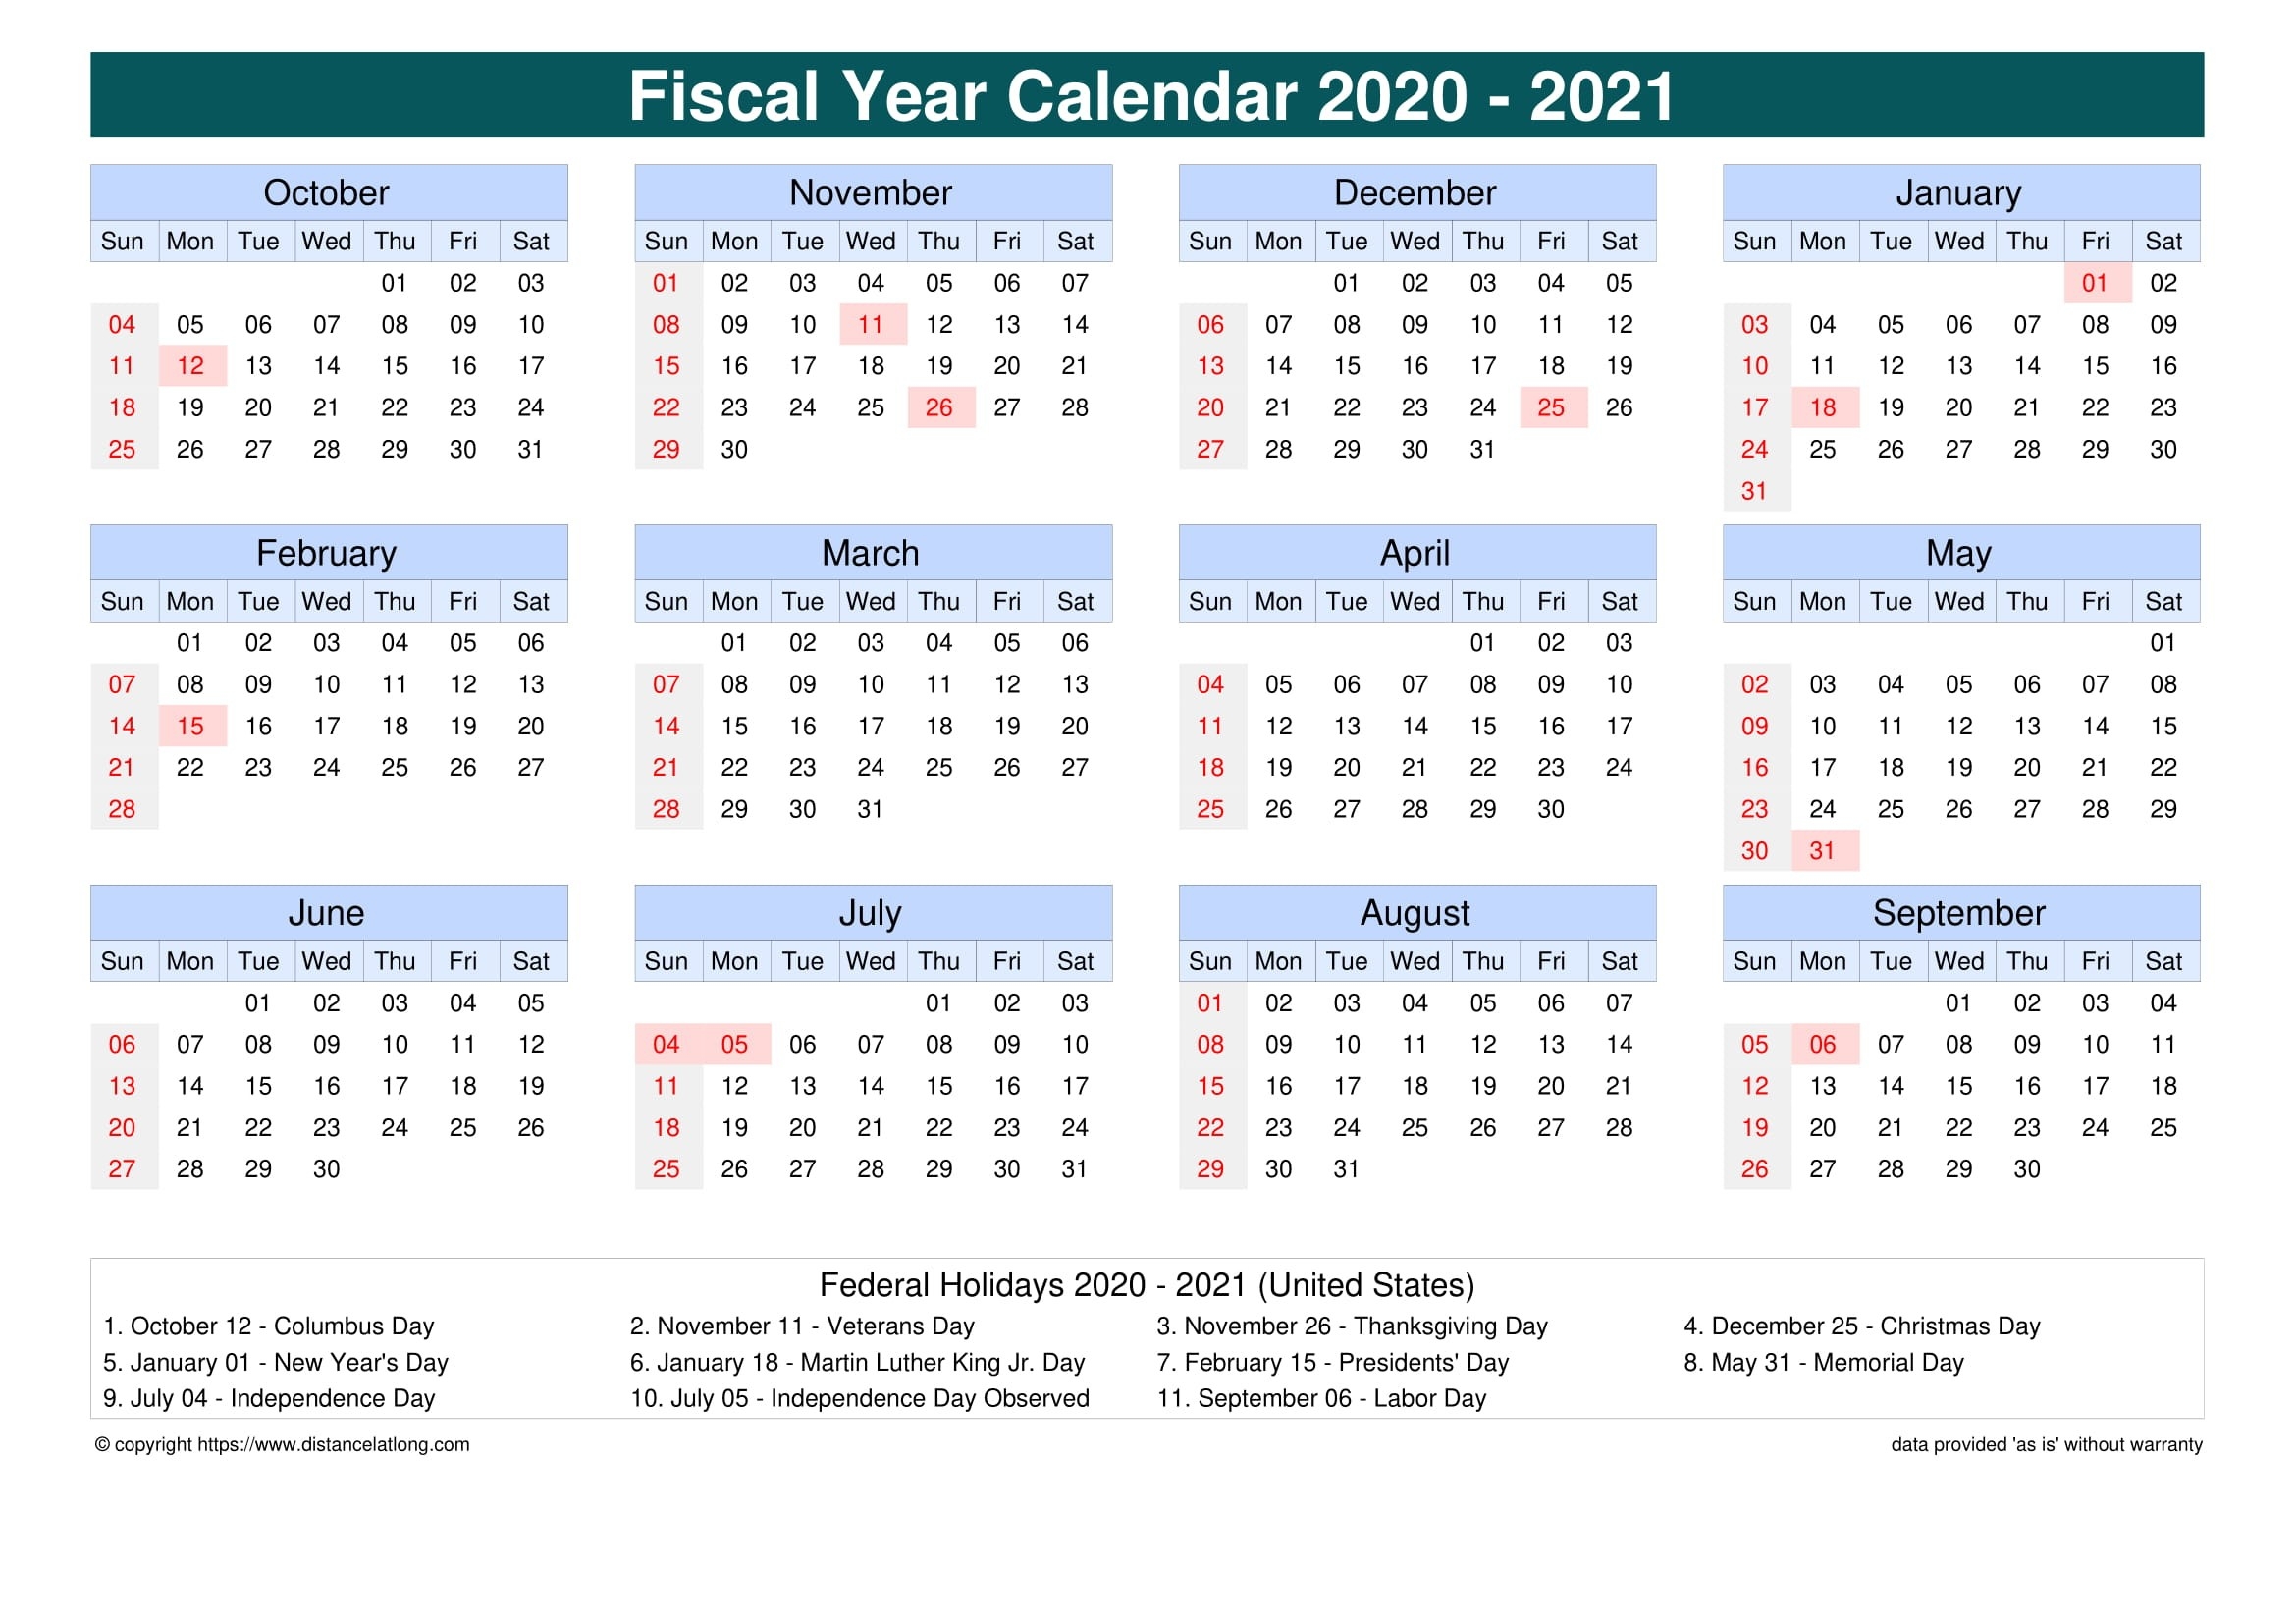 Fiscal Year 2020-2021 Calendar Templates, Free Printable  2021 19 Financial Year Calendar